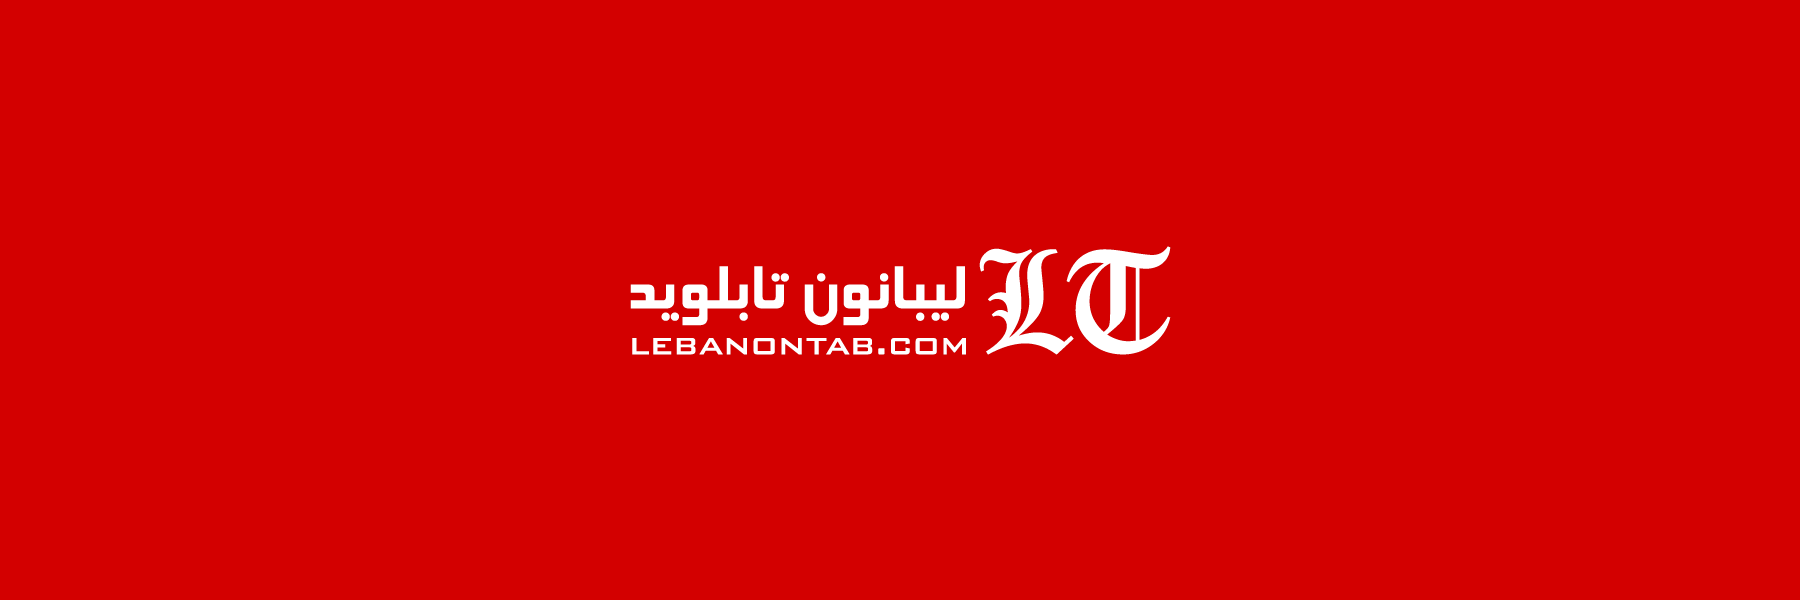 lebanon Tab - Lebanon News